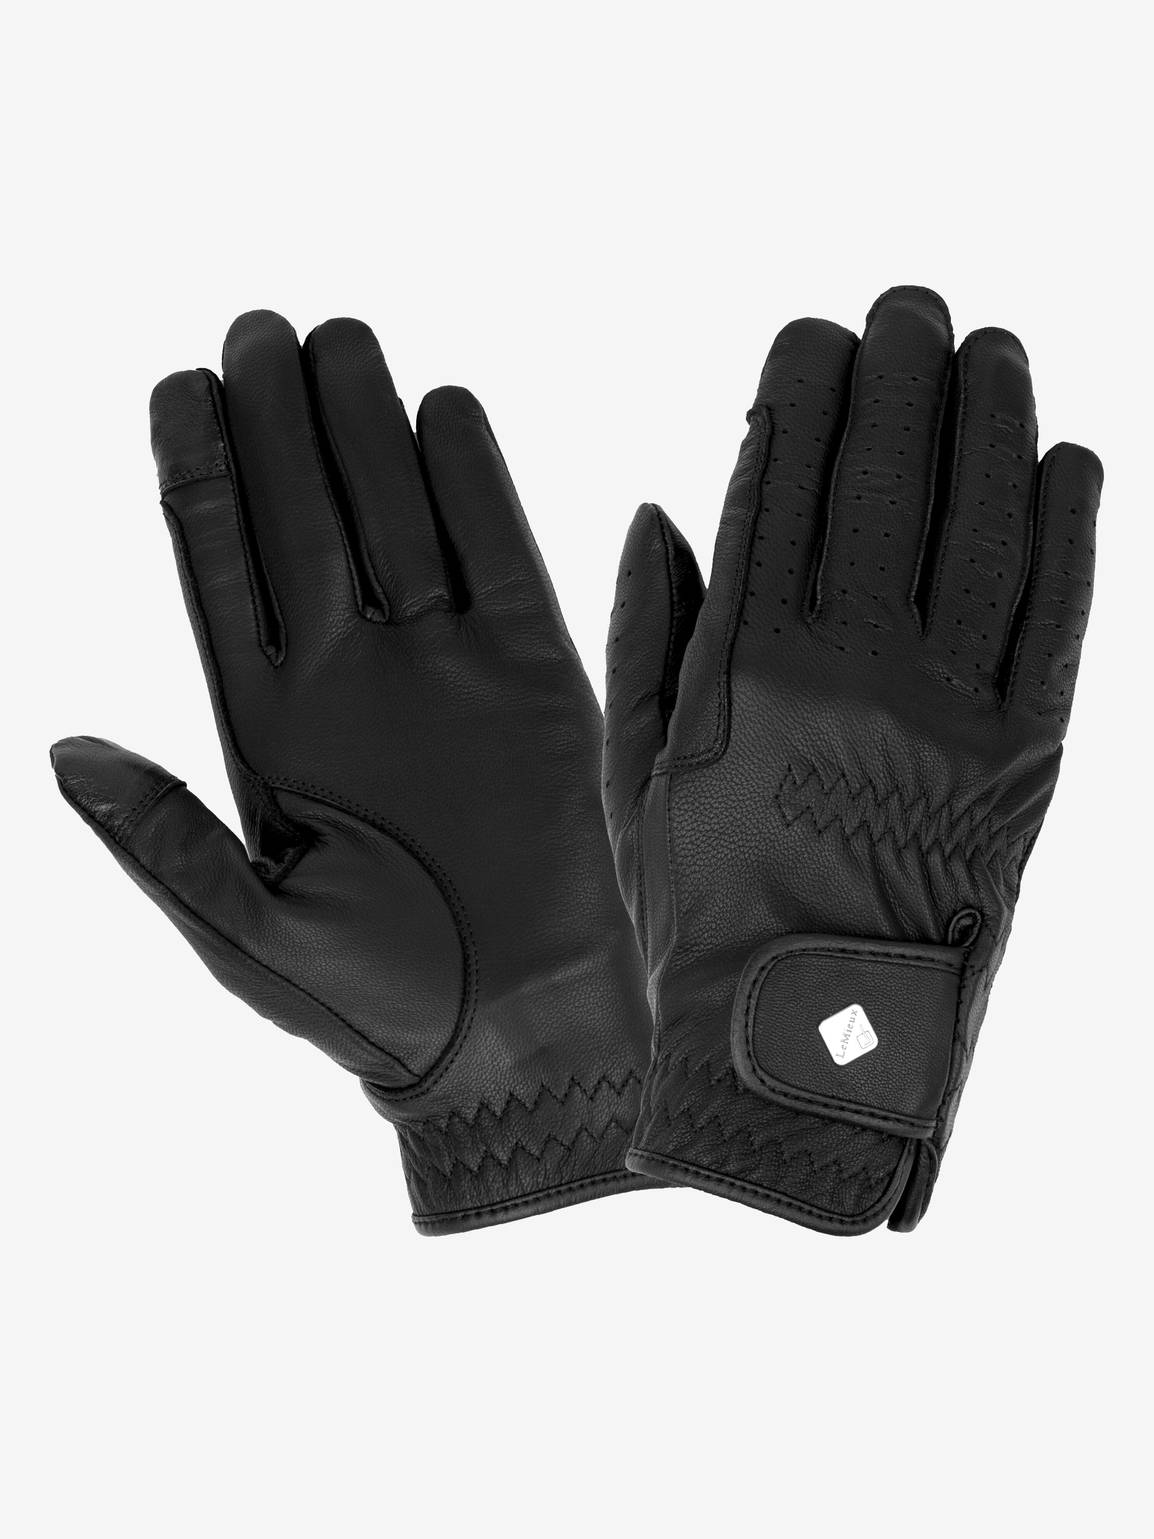 LeMieux Classic Leather Riding Gloves